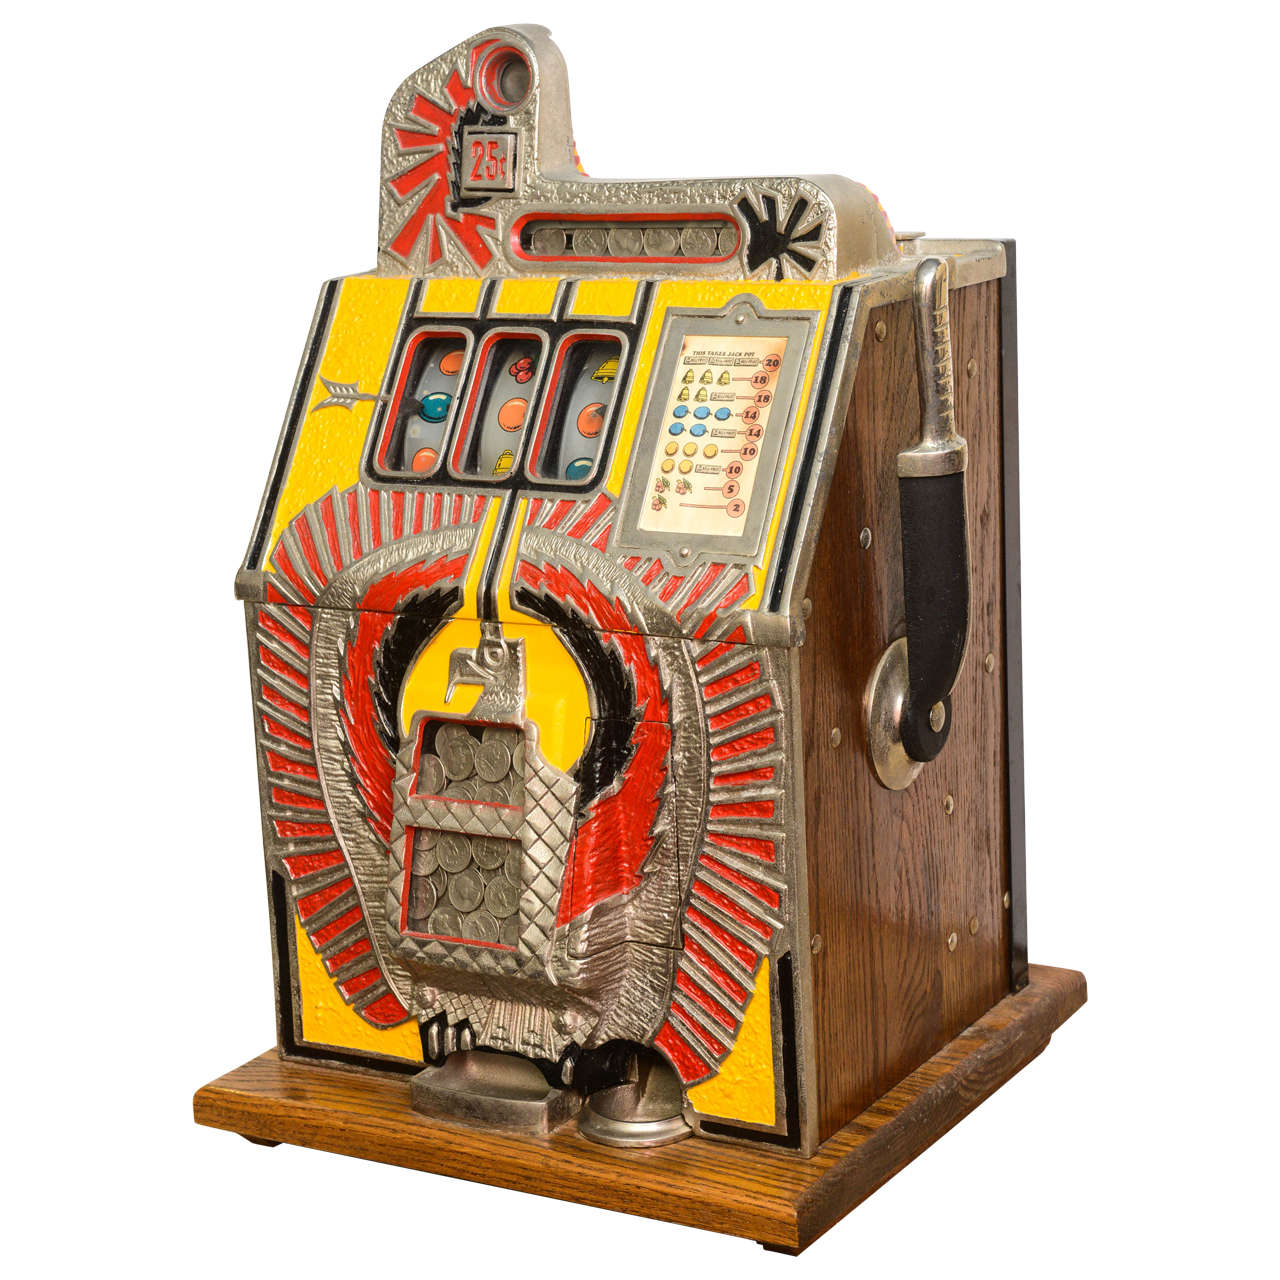 25 Cent War Eagle Mills Slot Machine, circa 1930s | mills war eagle machine, 1930 slot machine, 1930s machine